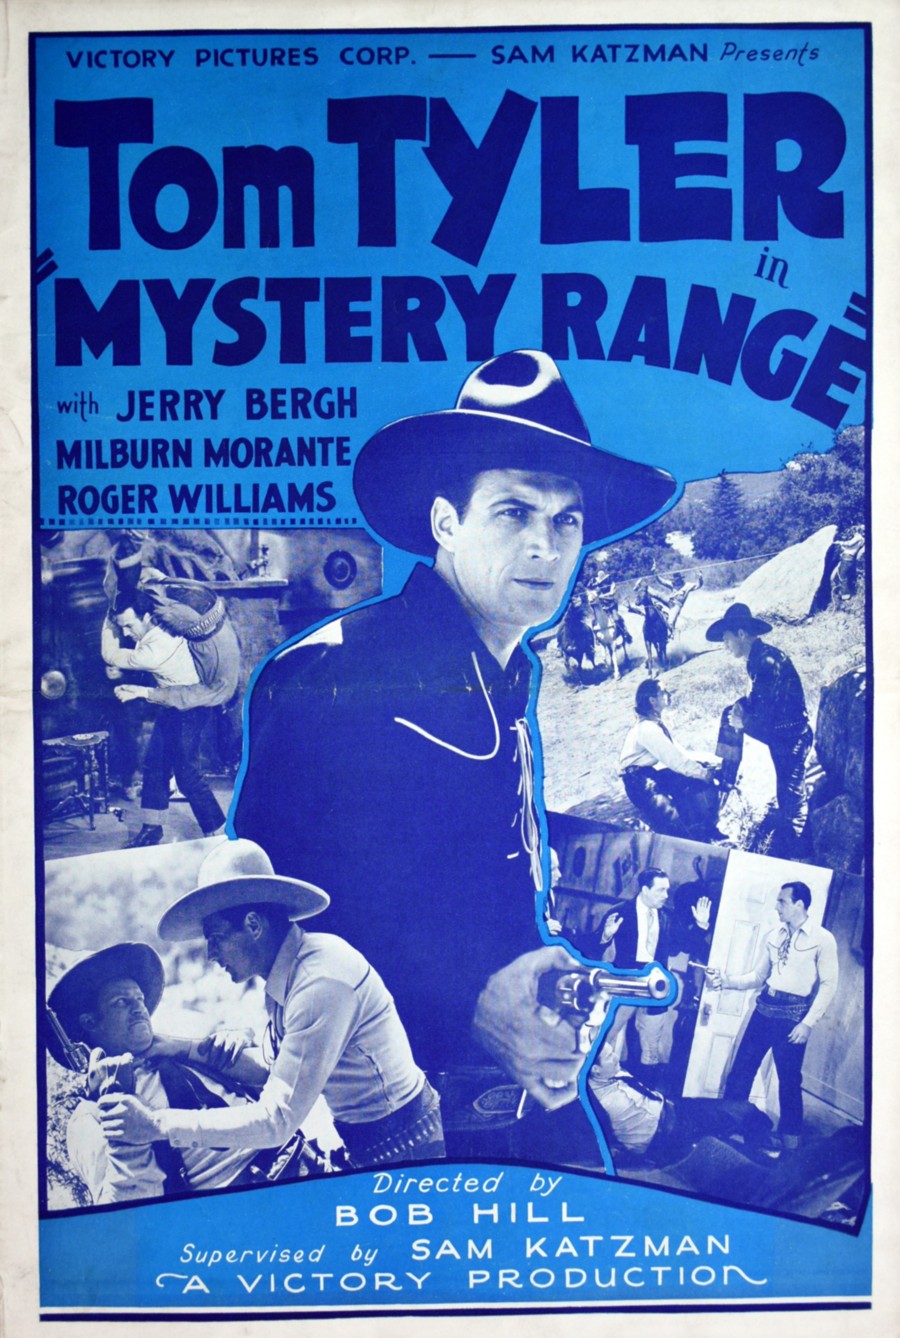 Mystery Range pressbook